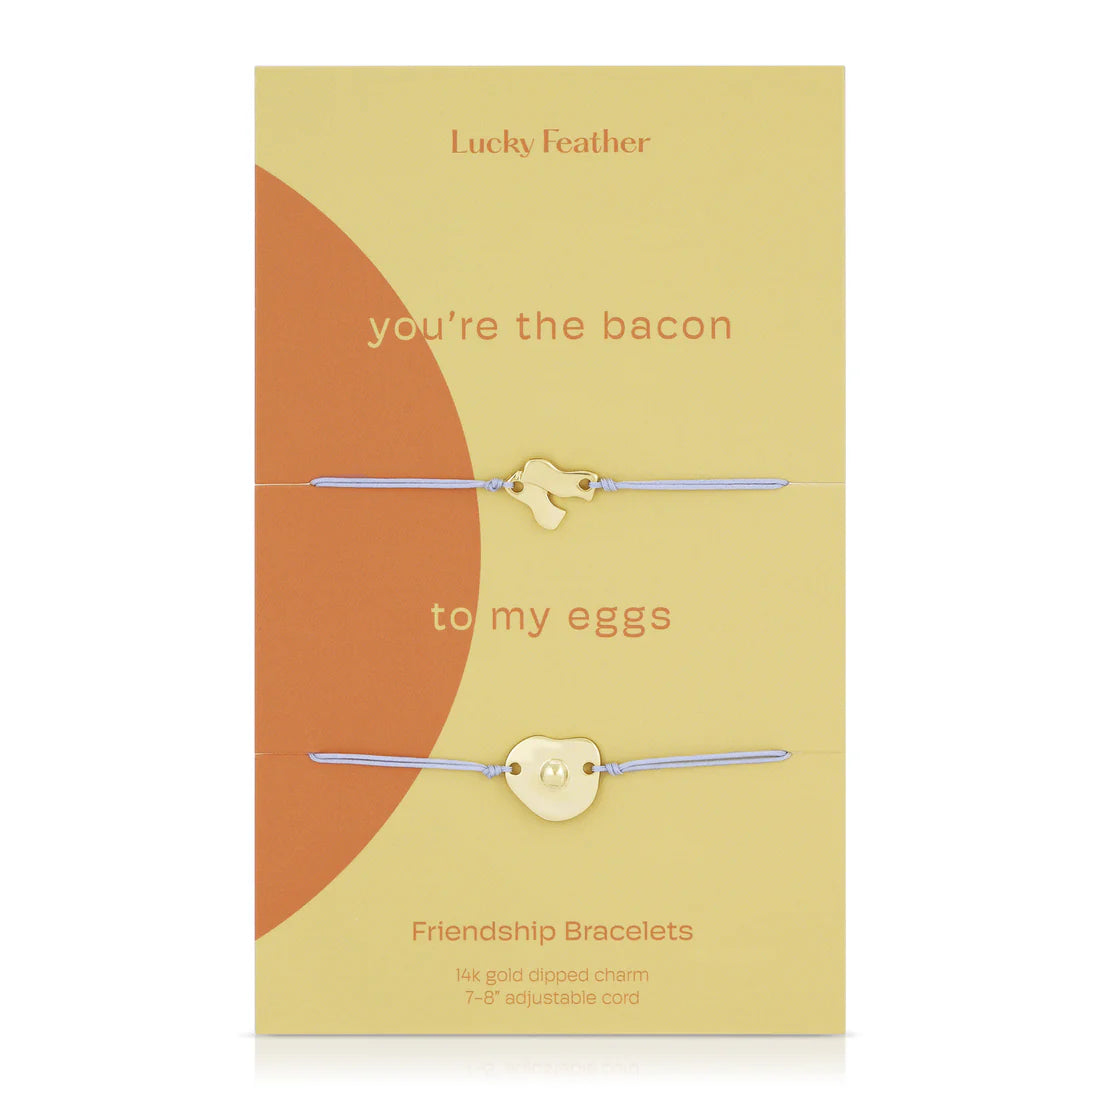 Friendship Bracelets - Bacon and Eggs